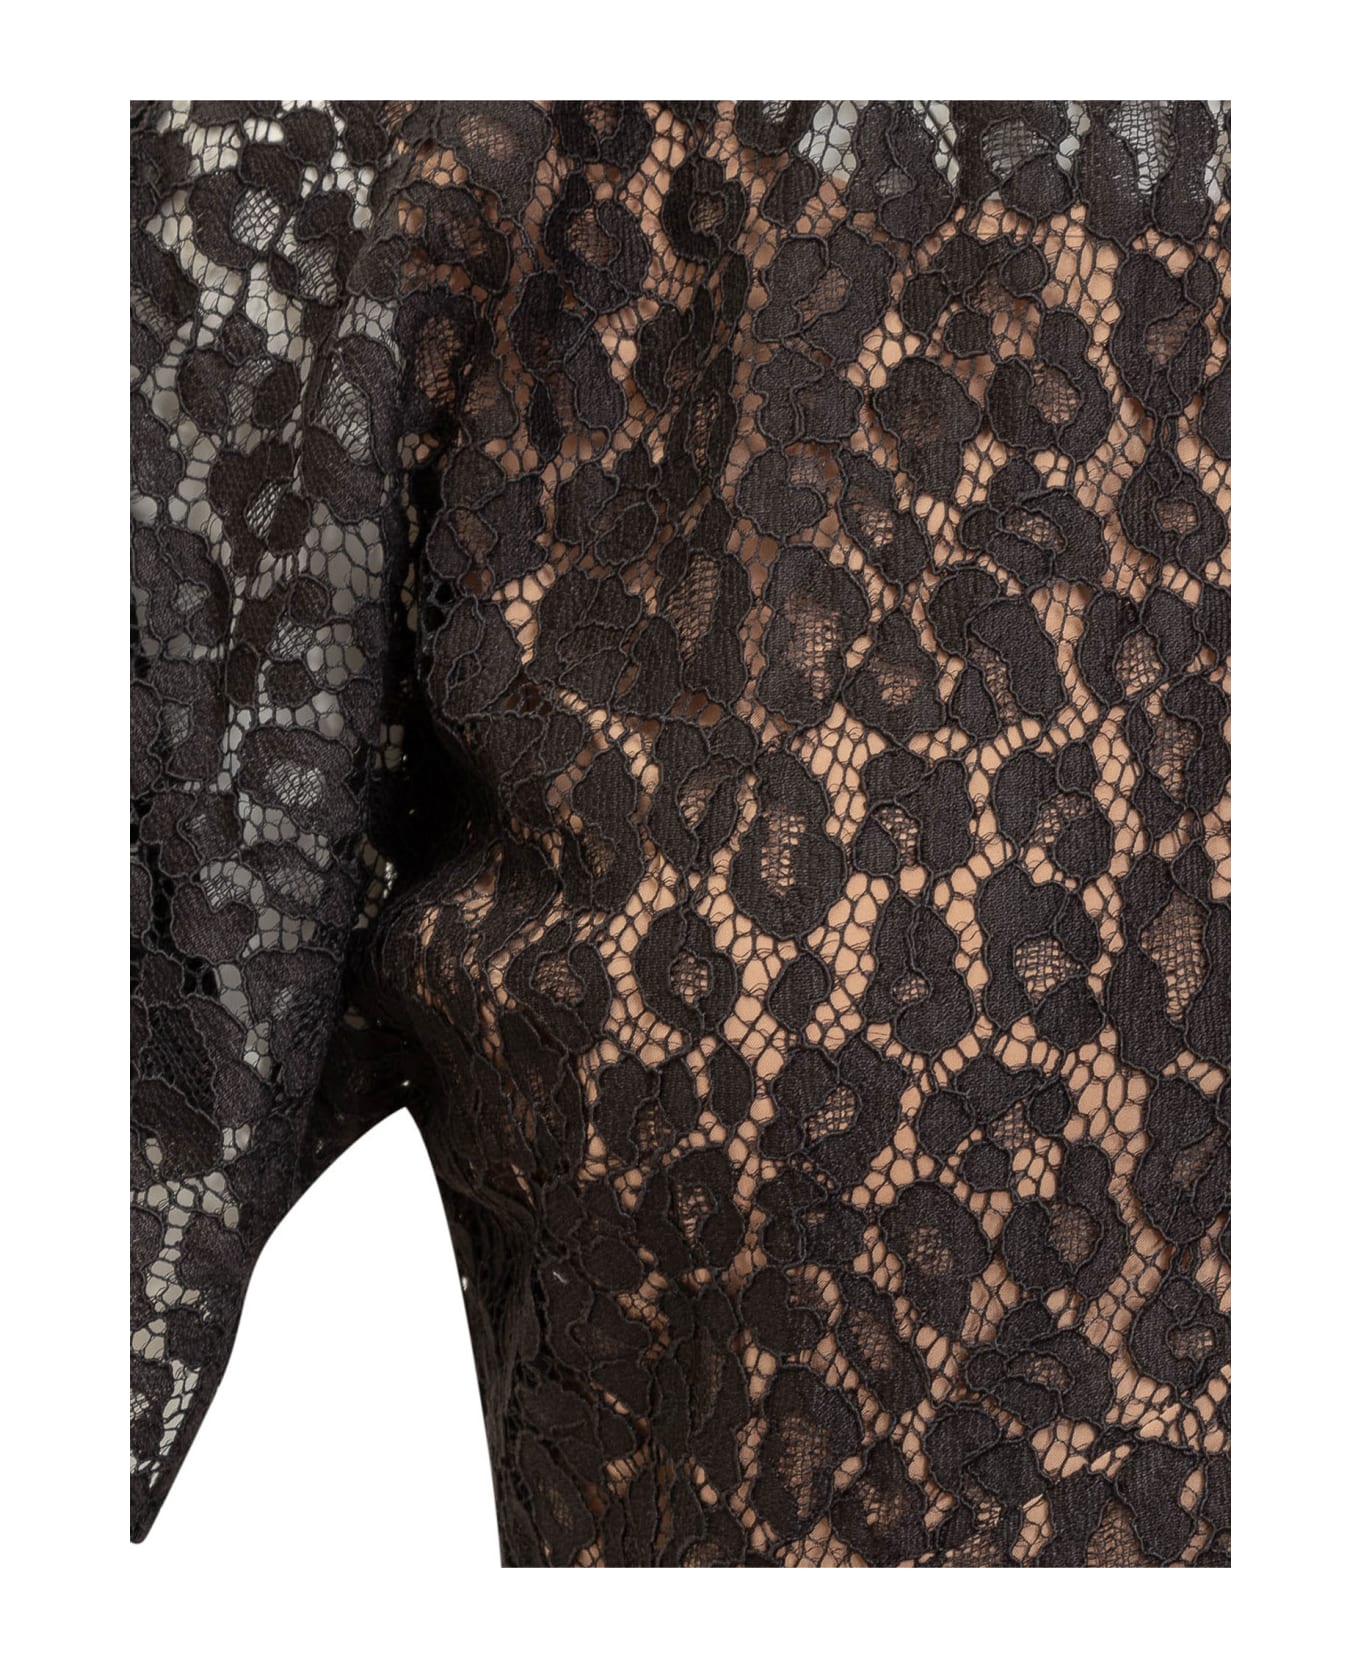 Michael Kors Cheetah Lace Midi Dress - BLACK